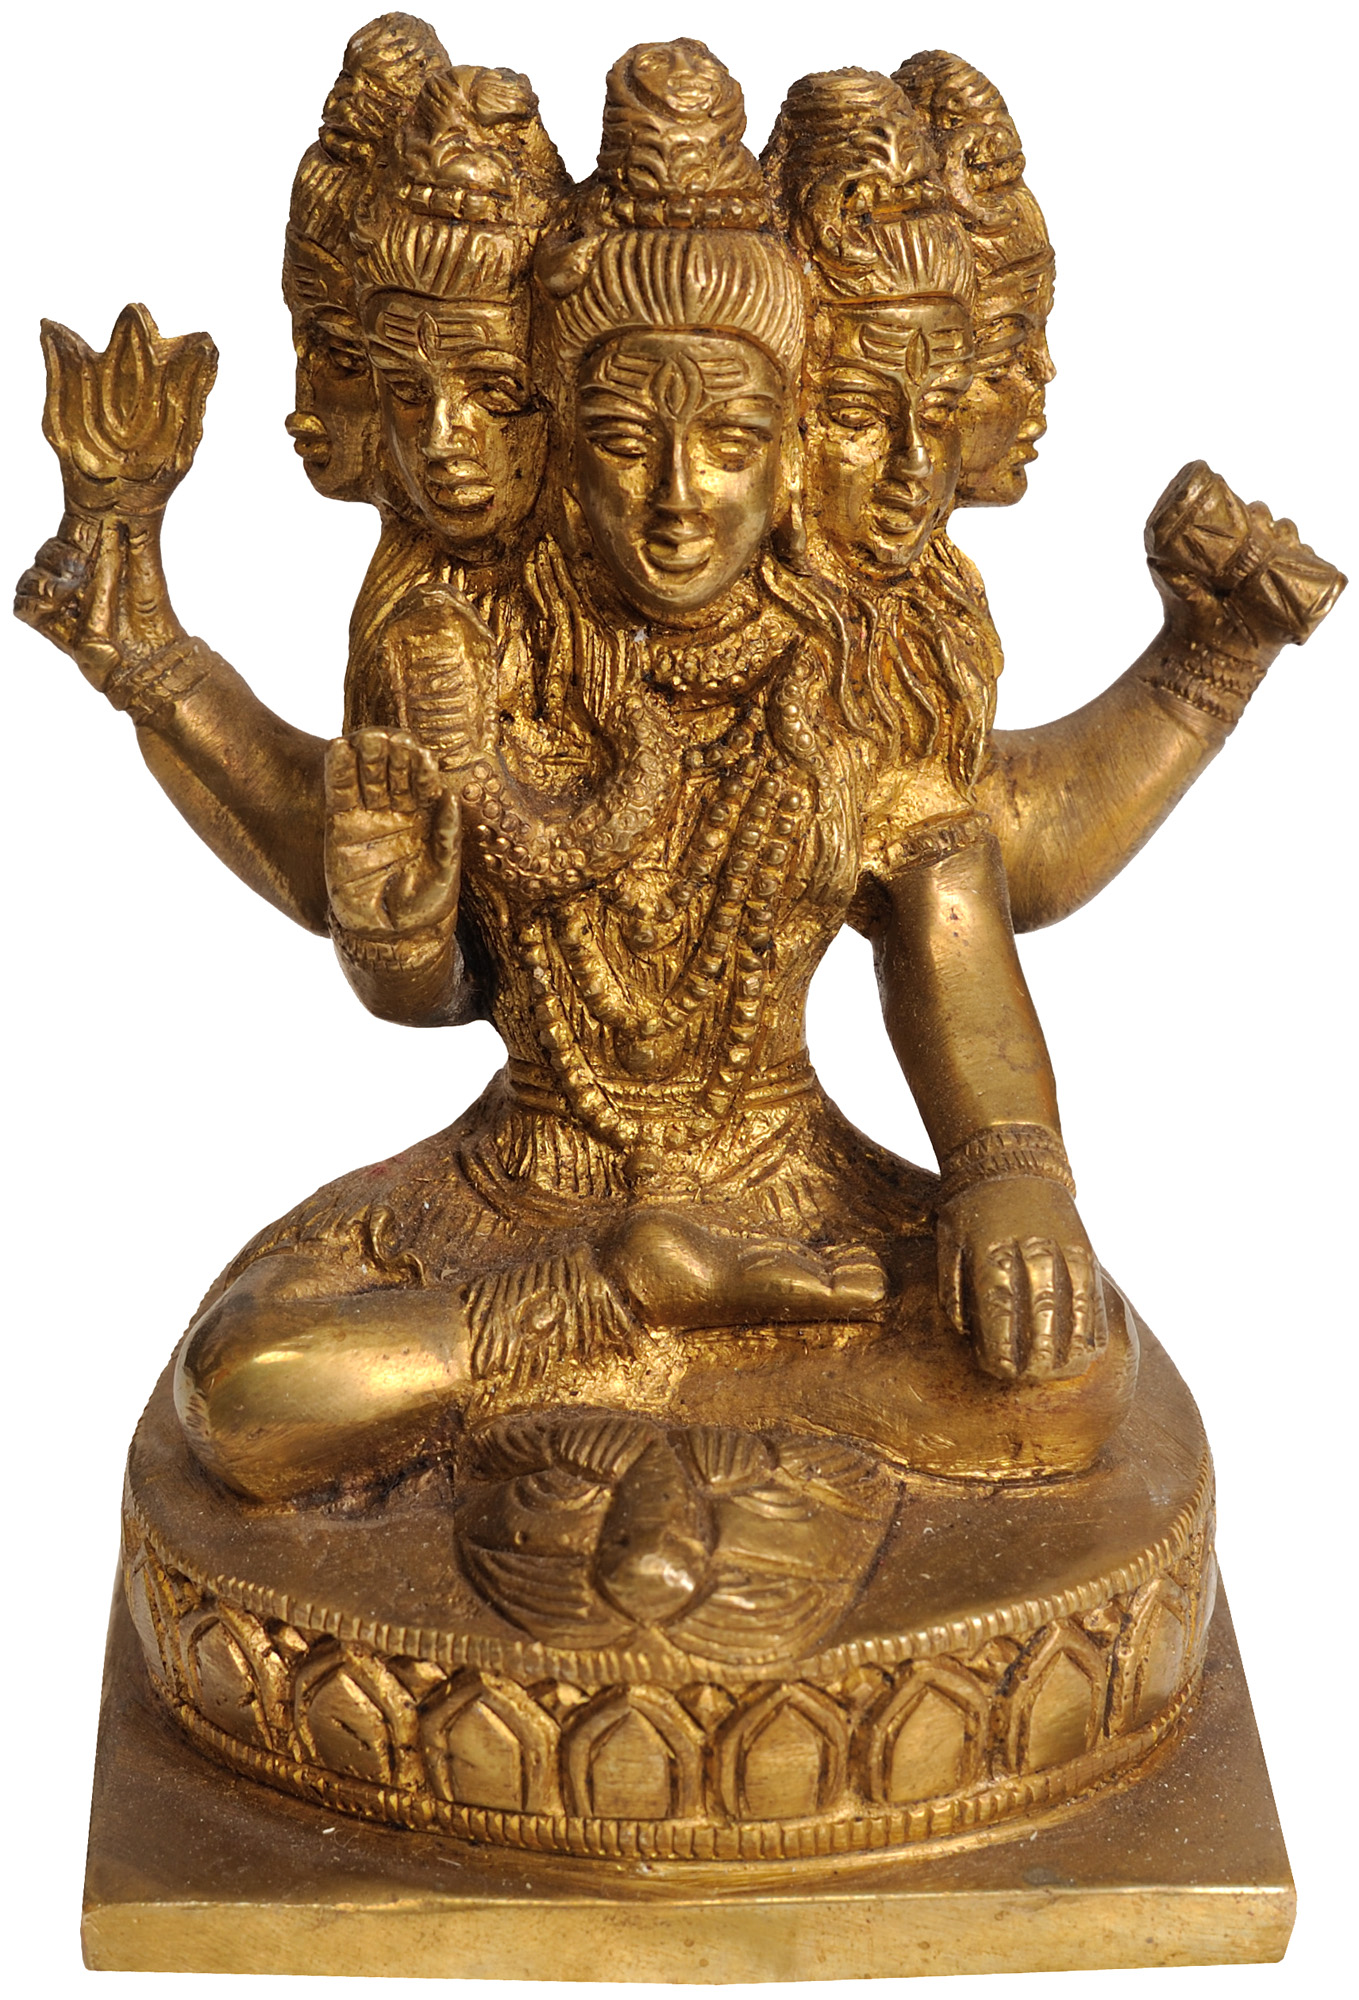 Five headed Shiva | Hindu art, Shiva, Iconography